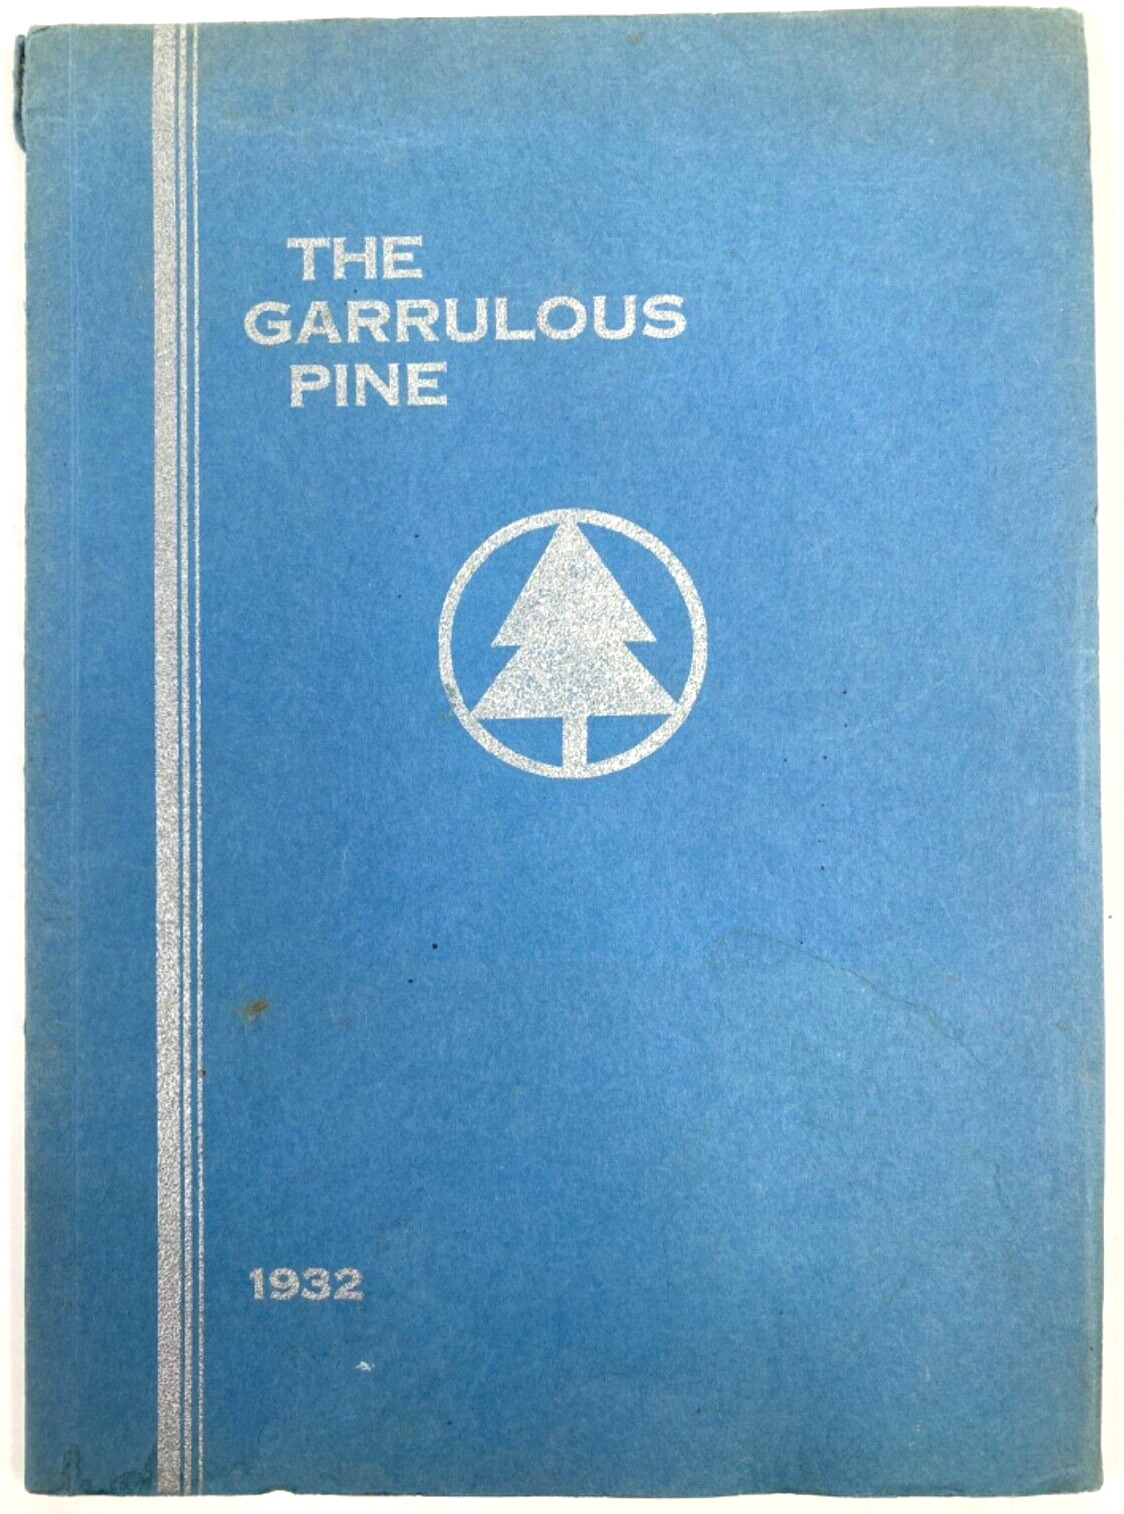 1932 THE CATLIN SCHOOL vintage annual yearbook GARRULOUS PINE - Portland, Oregon